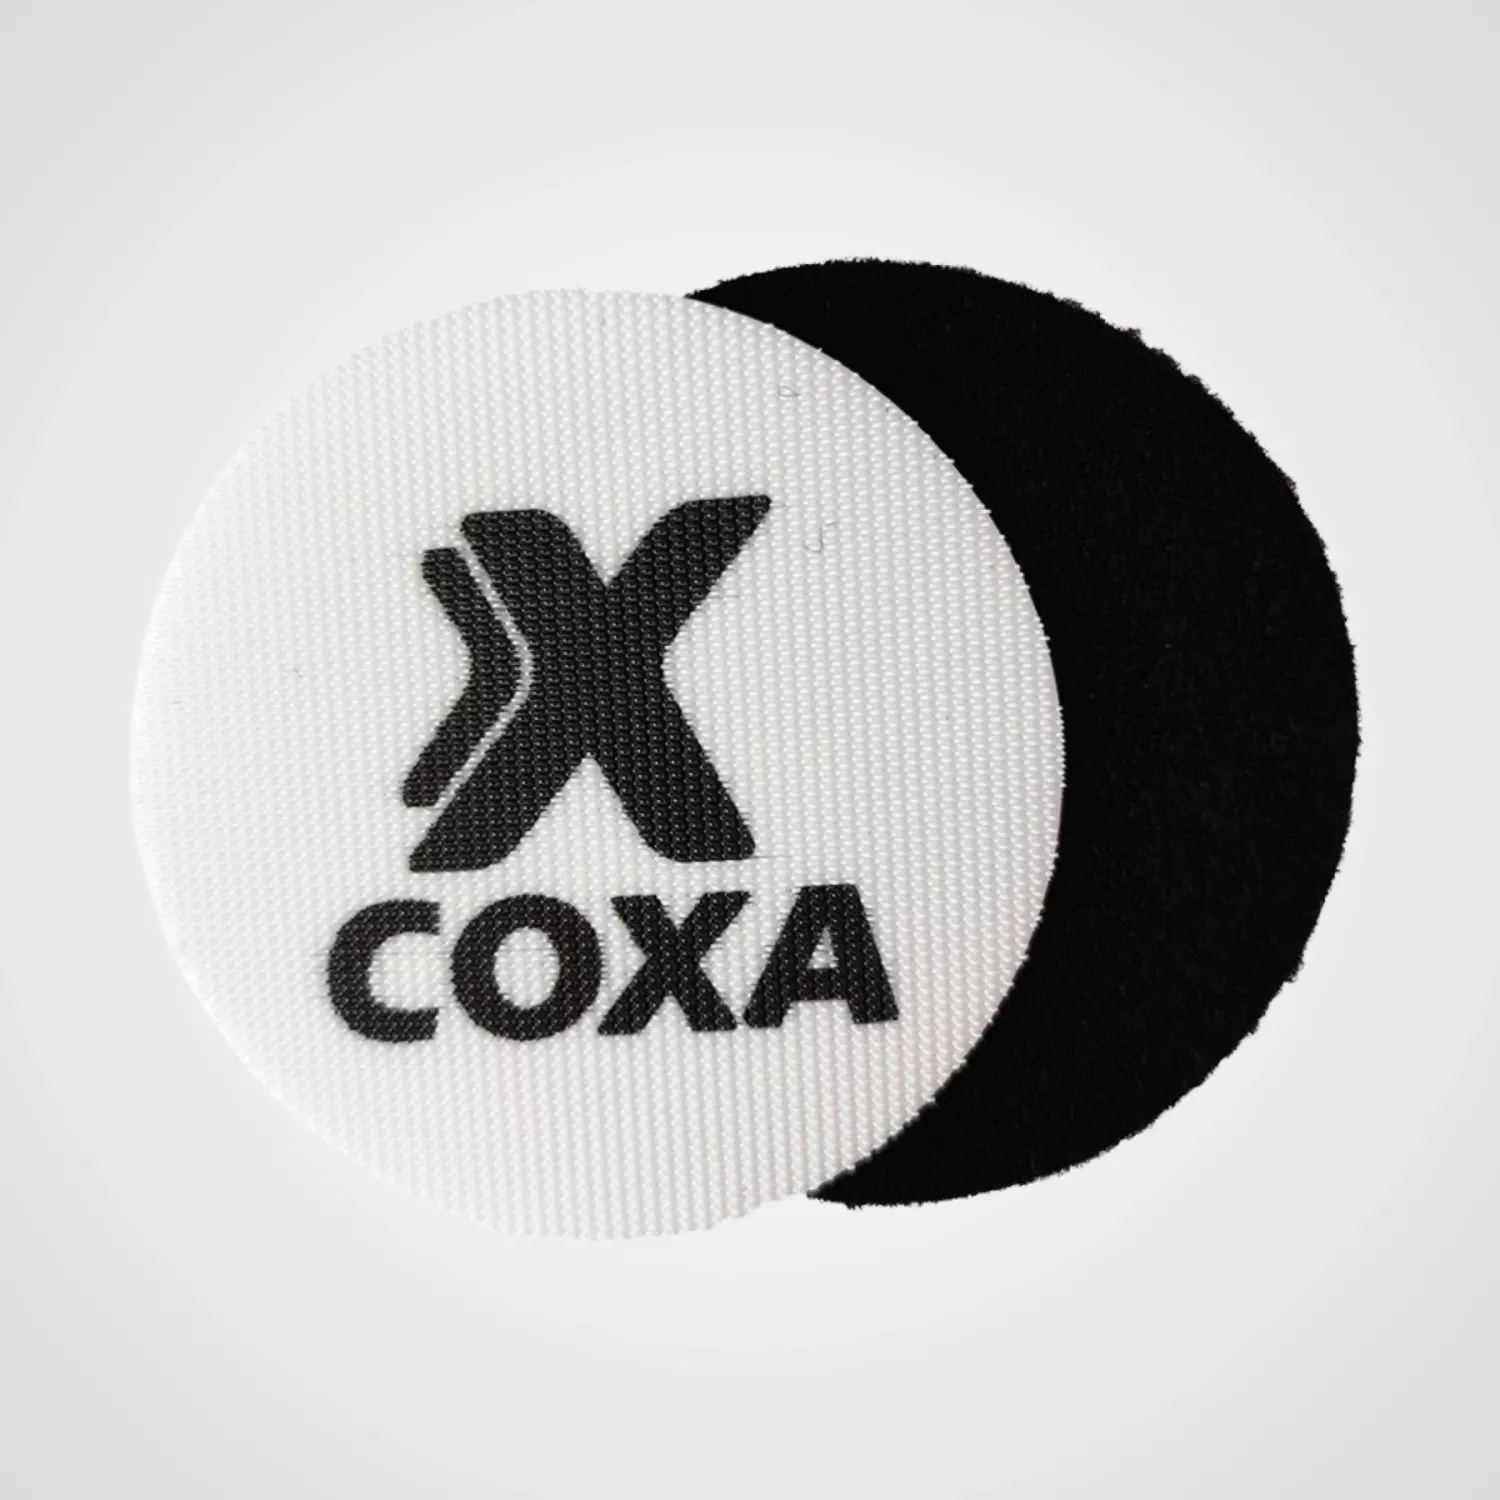 Coxa Velcro Stickers 4 pack